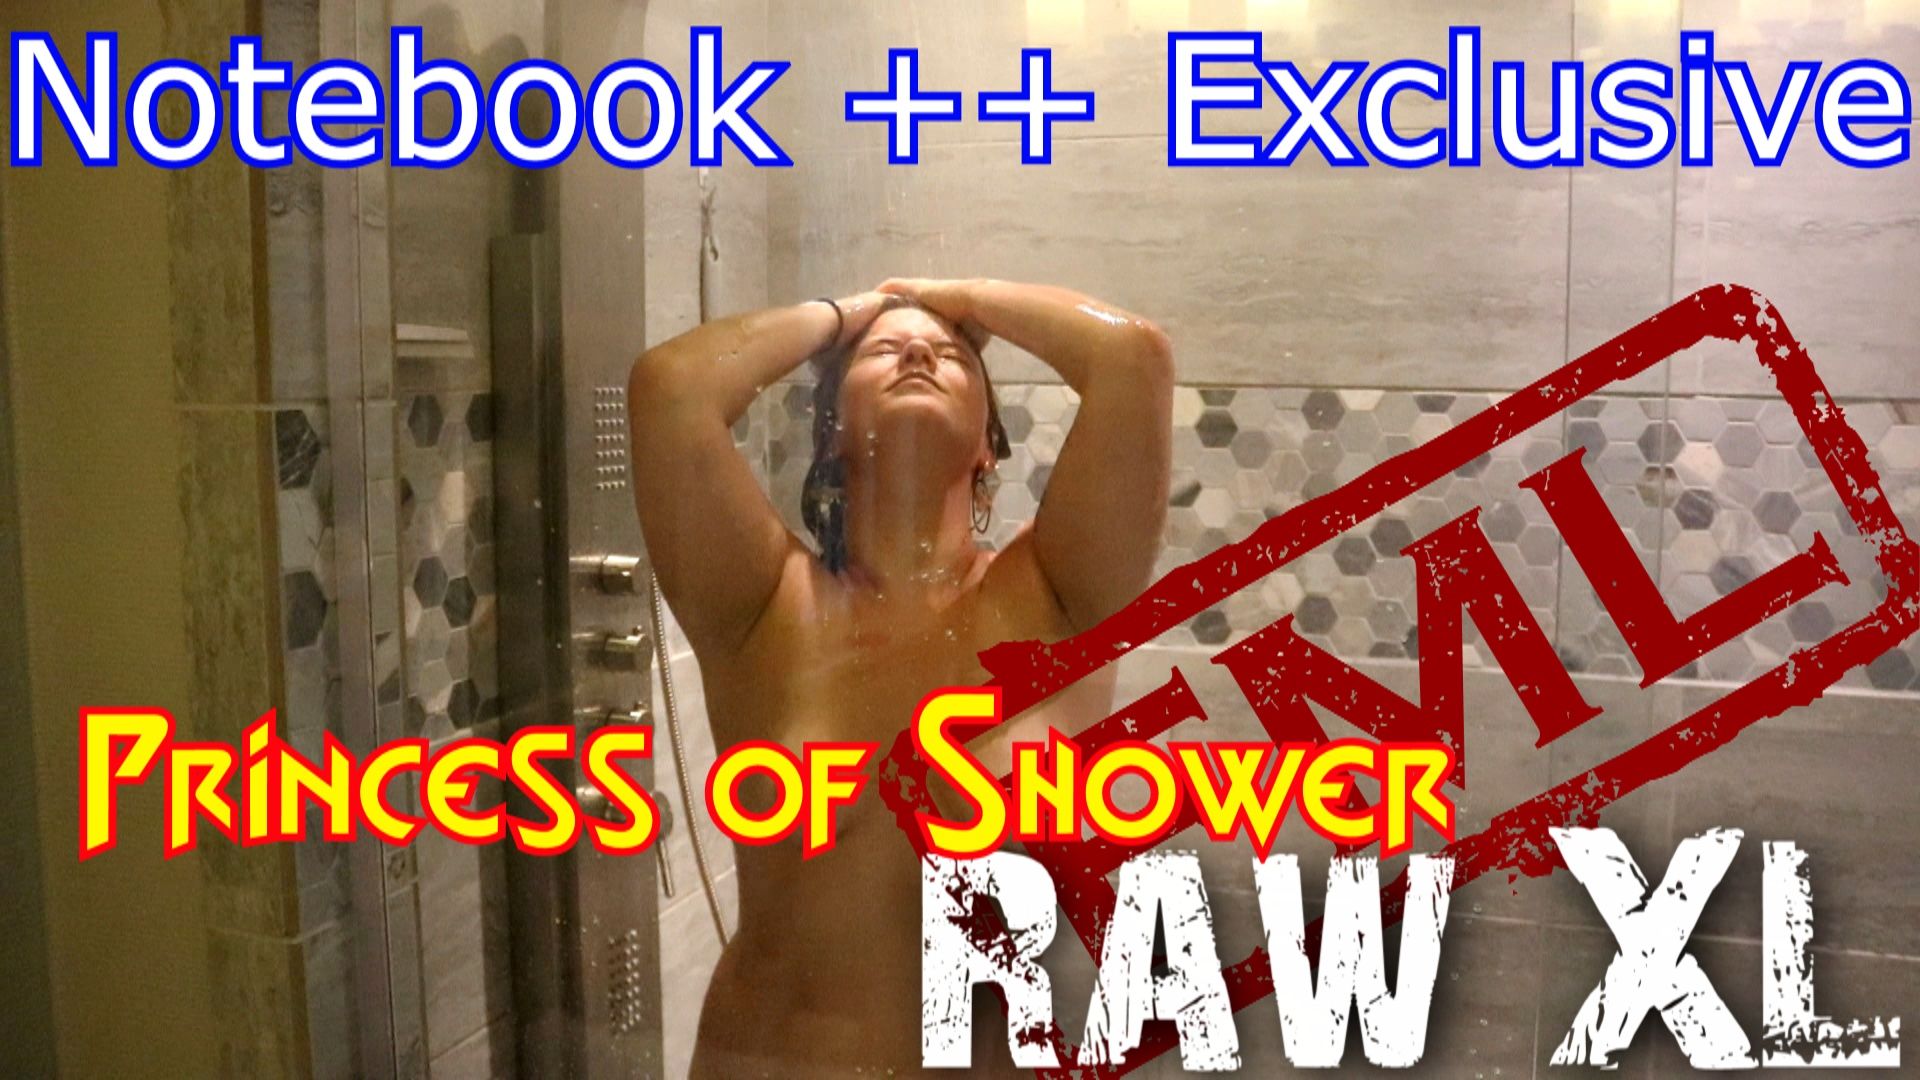 RAW XL: Princess of Shower (uncensored) 